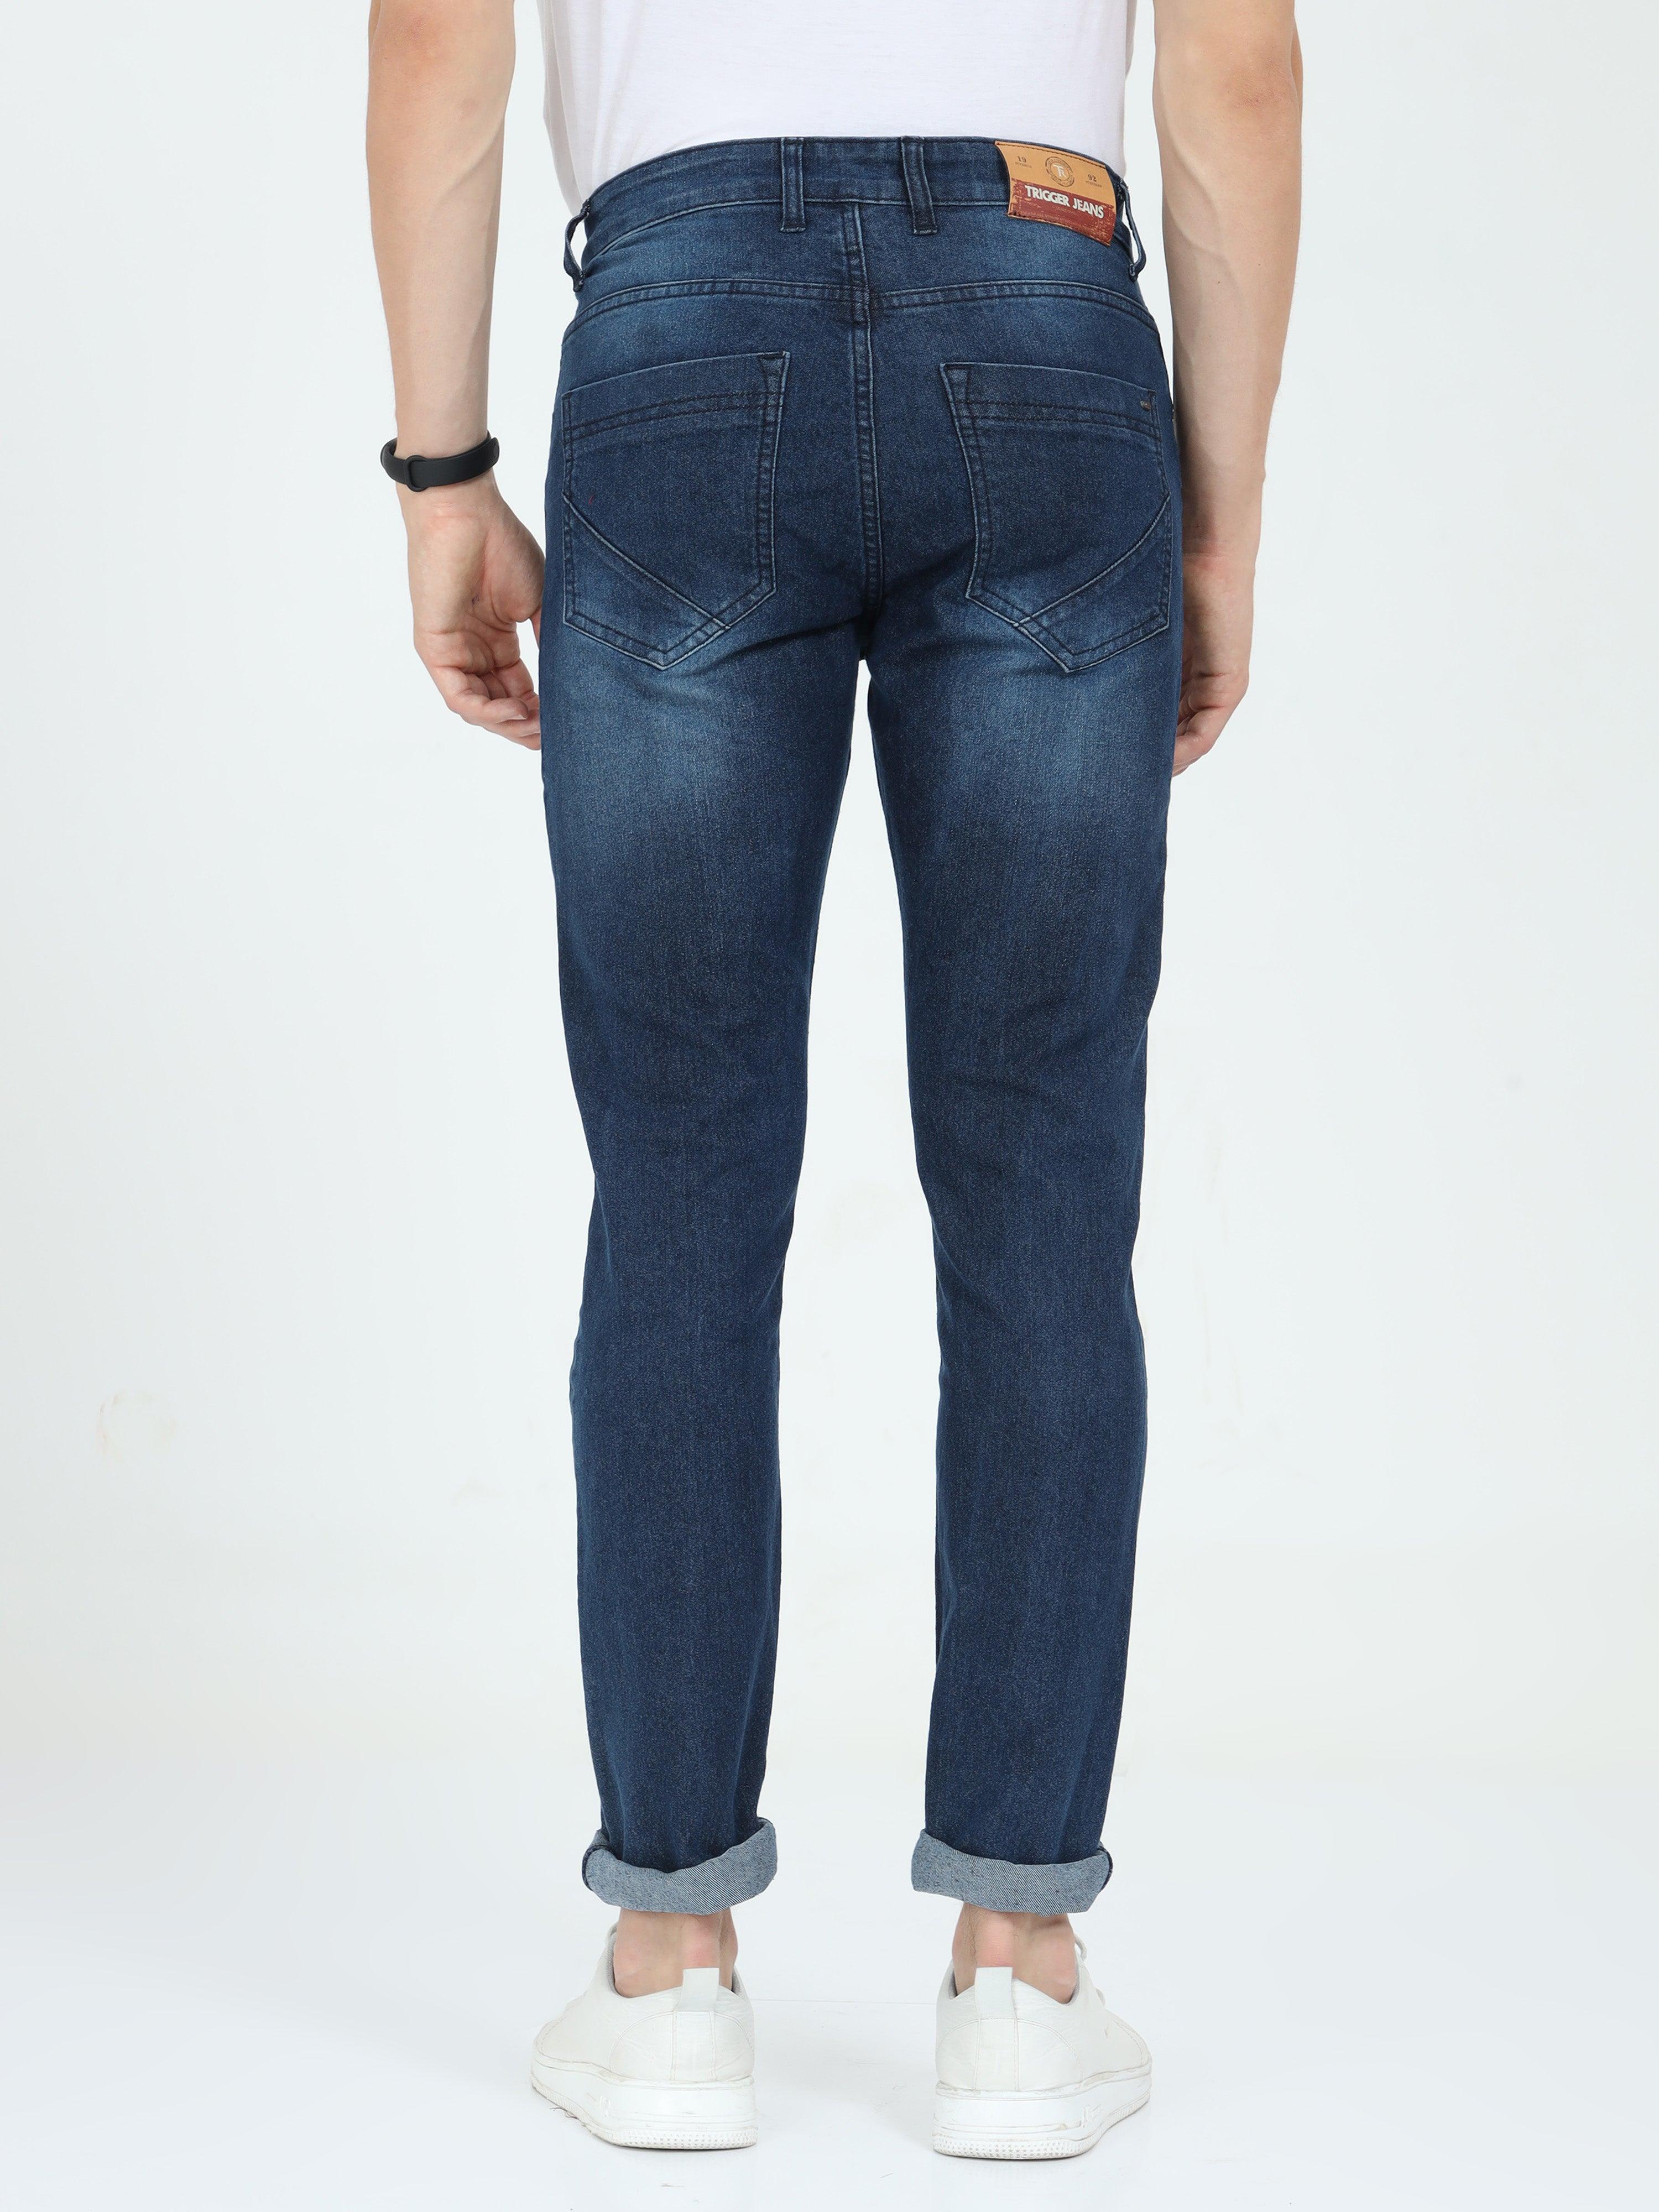 Men's Slim Fit Jeans - Blue 